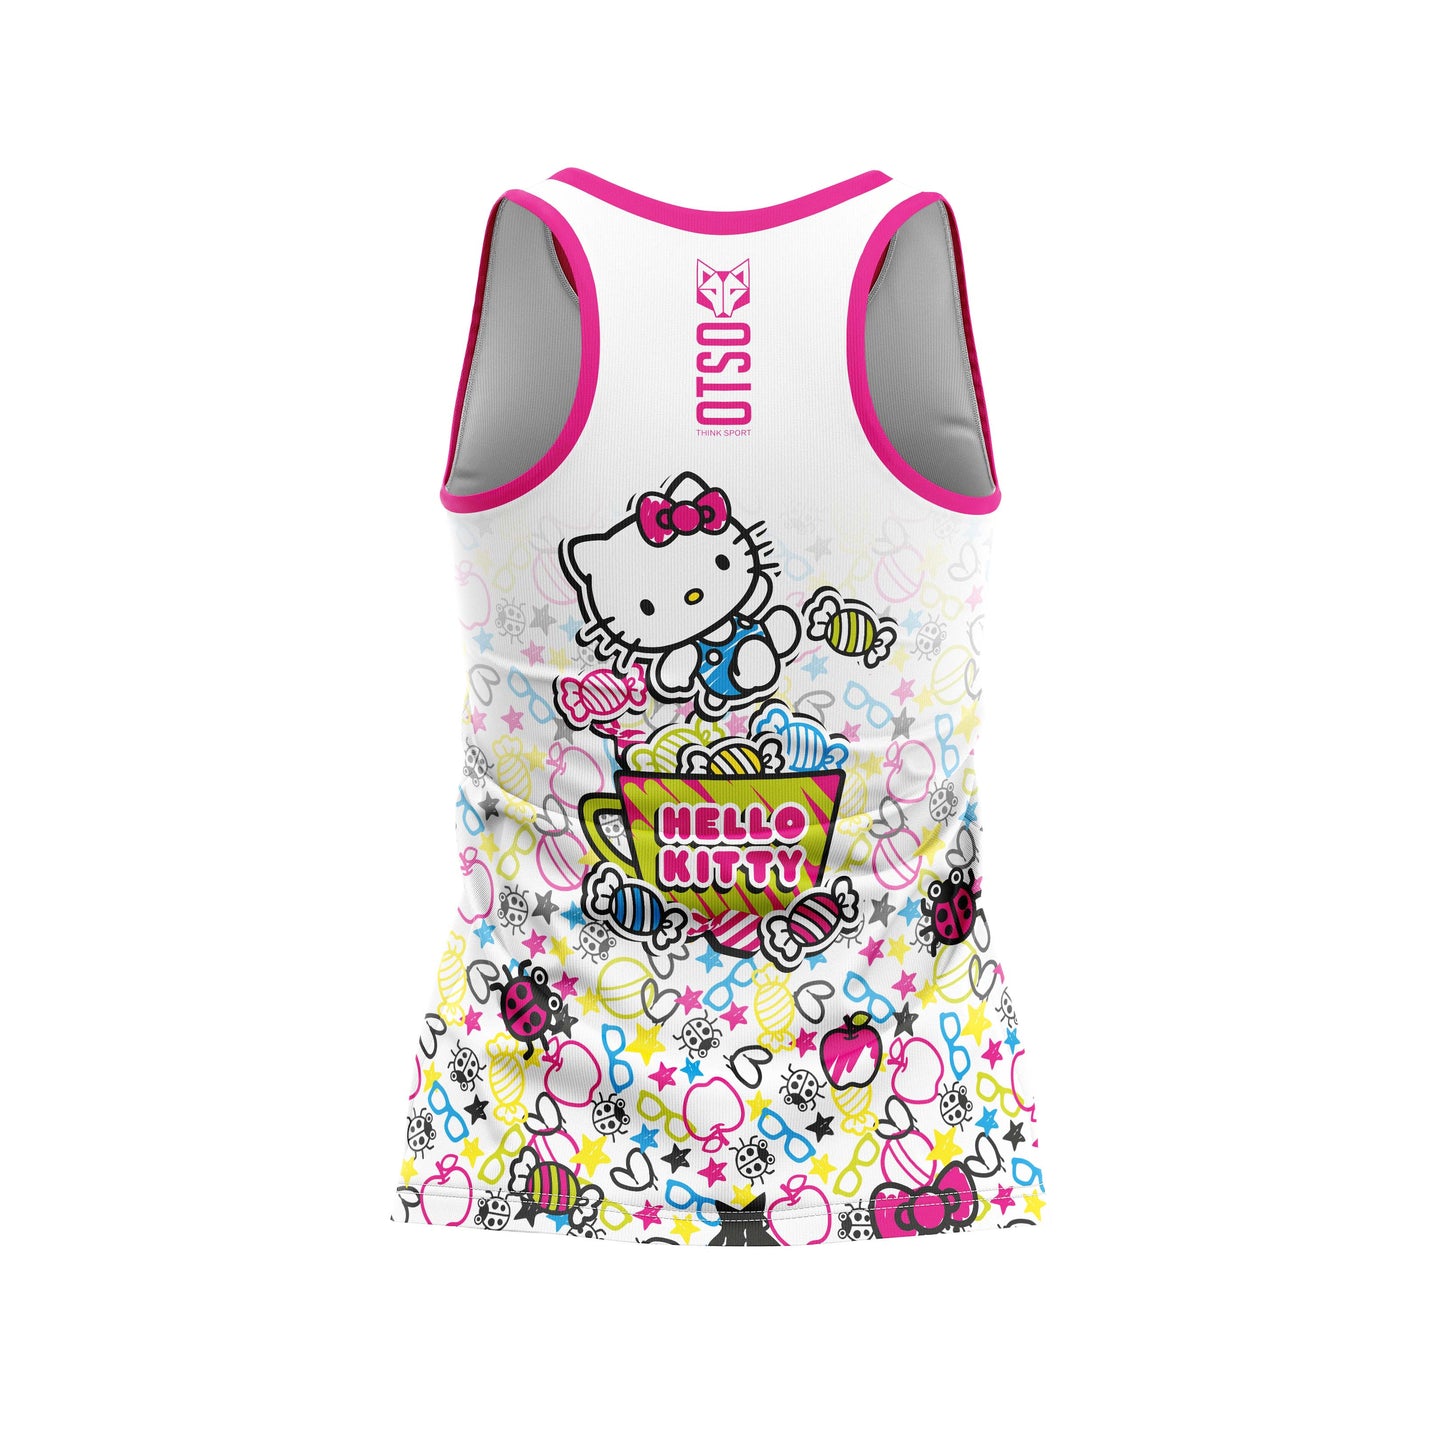 Camiseta sin mangas niña y mujer - Hello Kitty Sweet